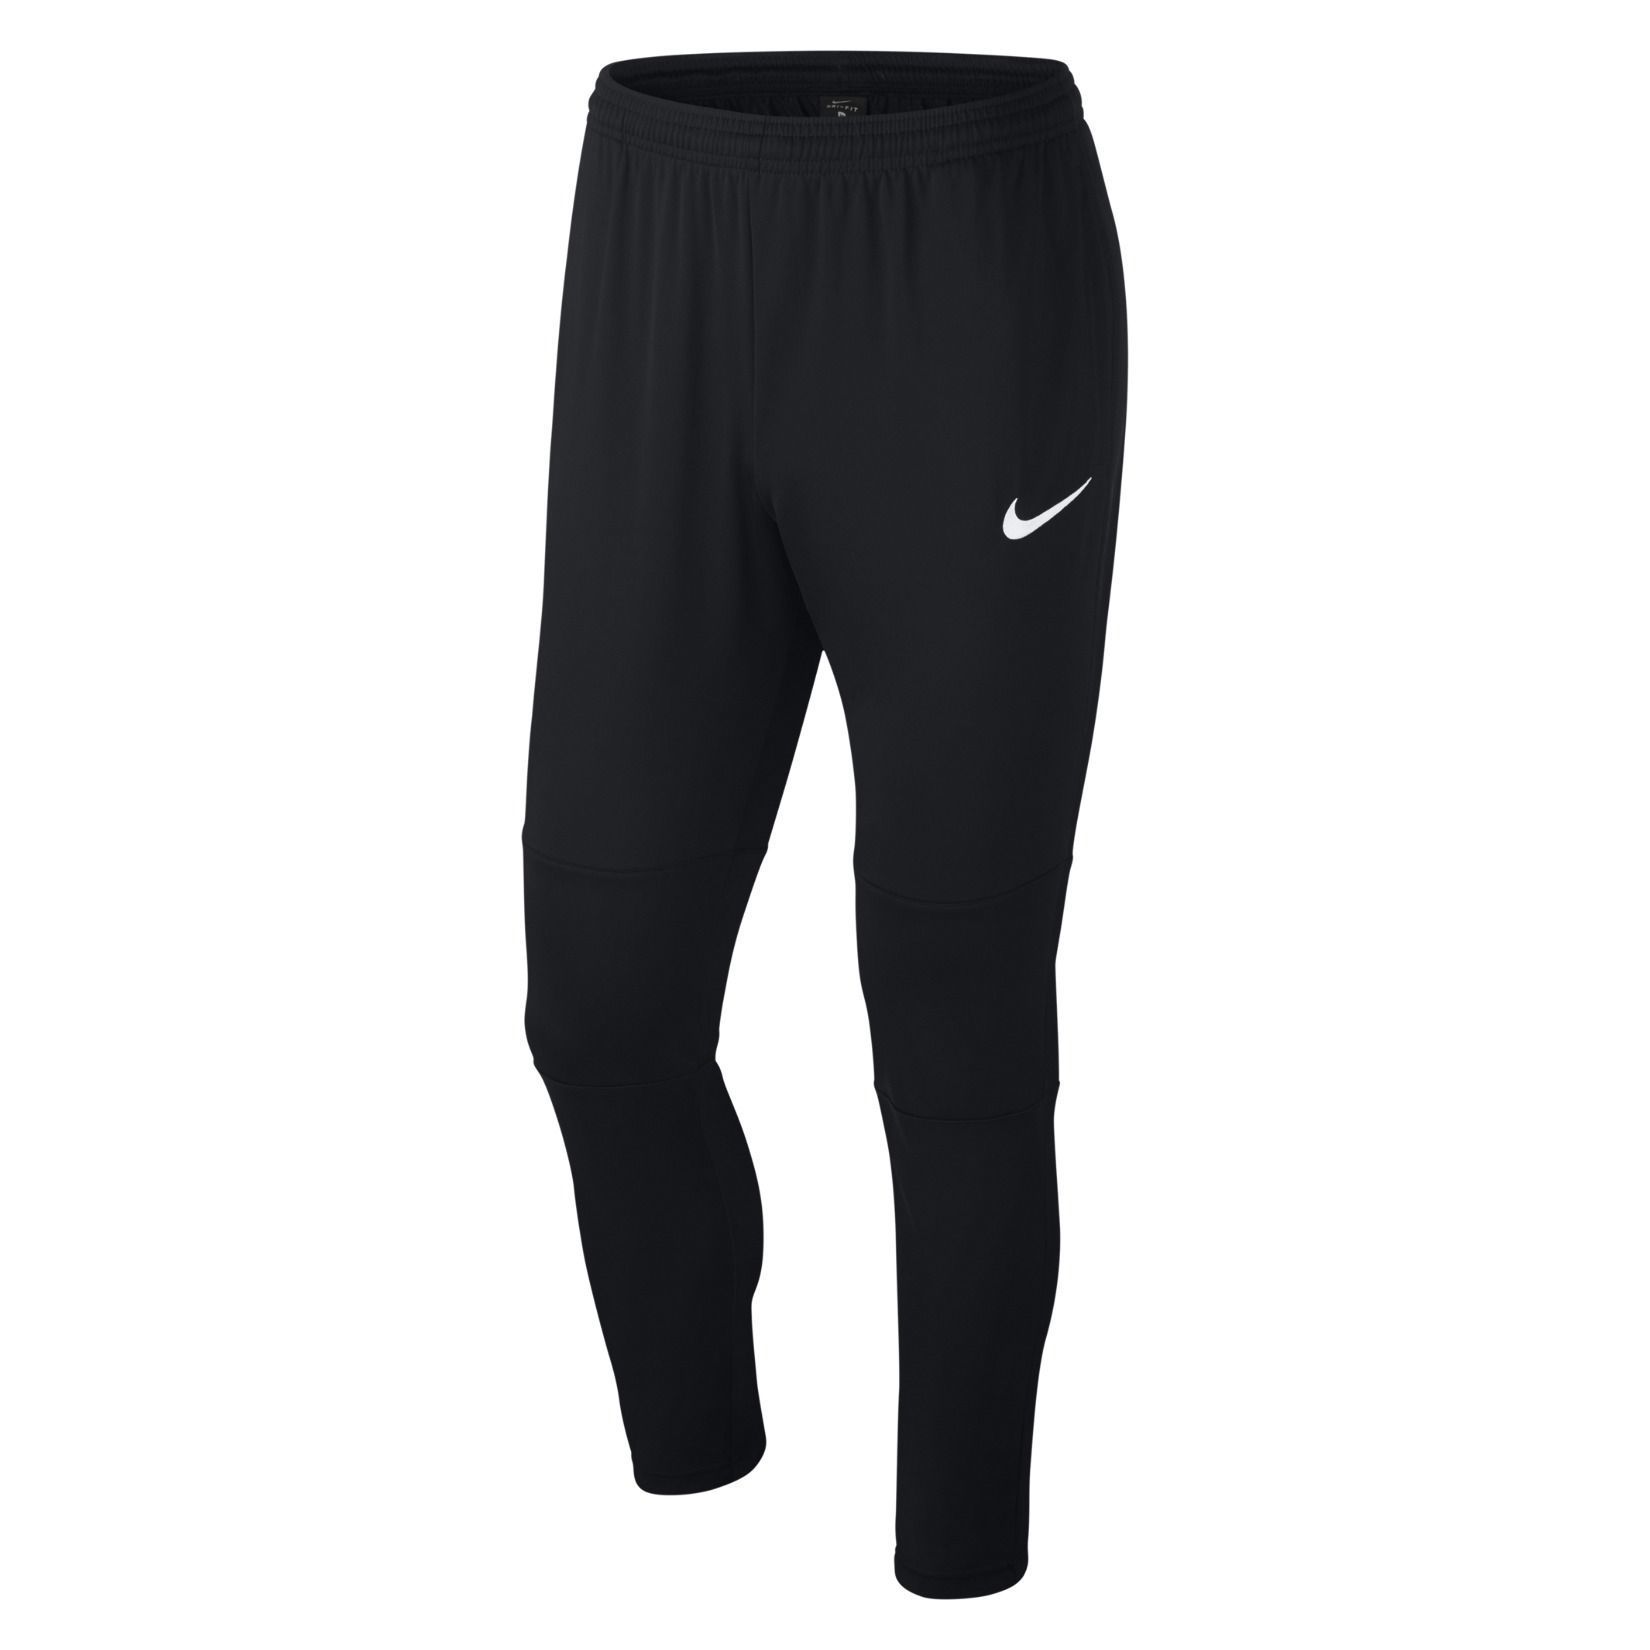 Nike Baseball Pants Size Chart